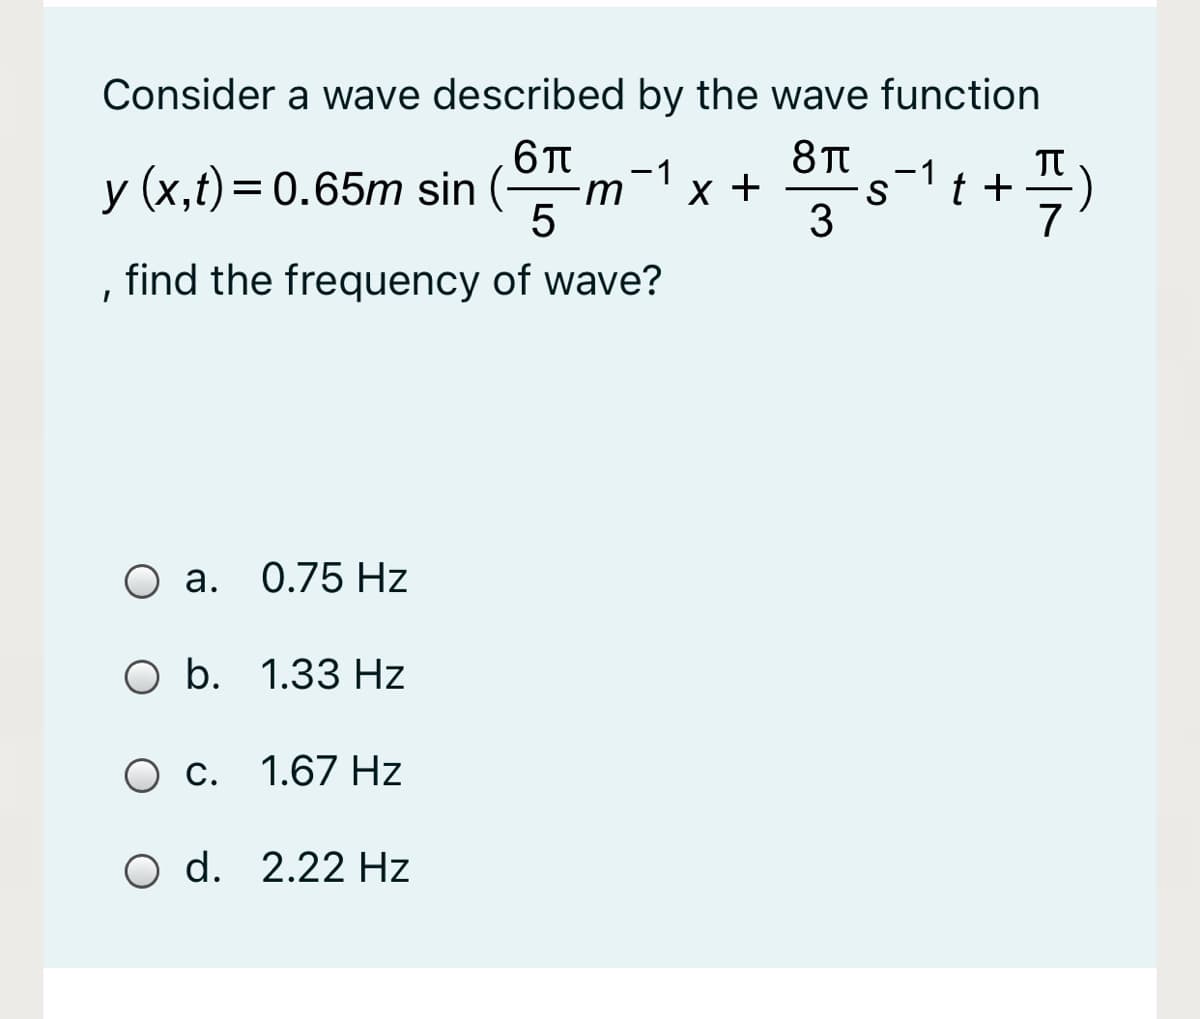 Consider a wave described by the wave function
TT
t +
-1
y (x,t)= 0.65m sin (-
-1
S
3
find the frequency of wave?
O a. 0.75 Hz
O b. 1.33 Hz
O c. 1.67 Hz
O d. 2.22 Hz
